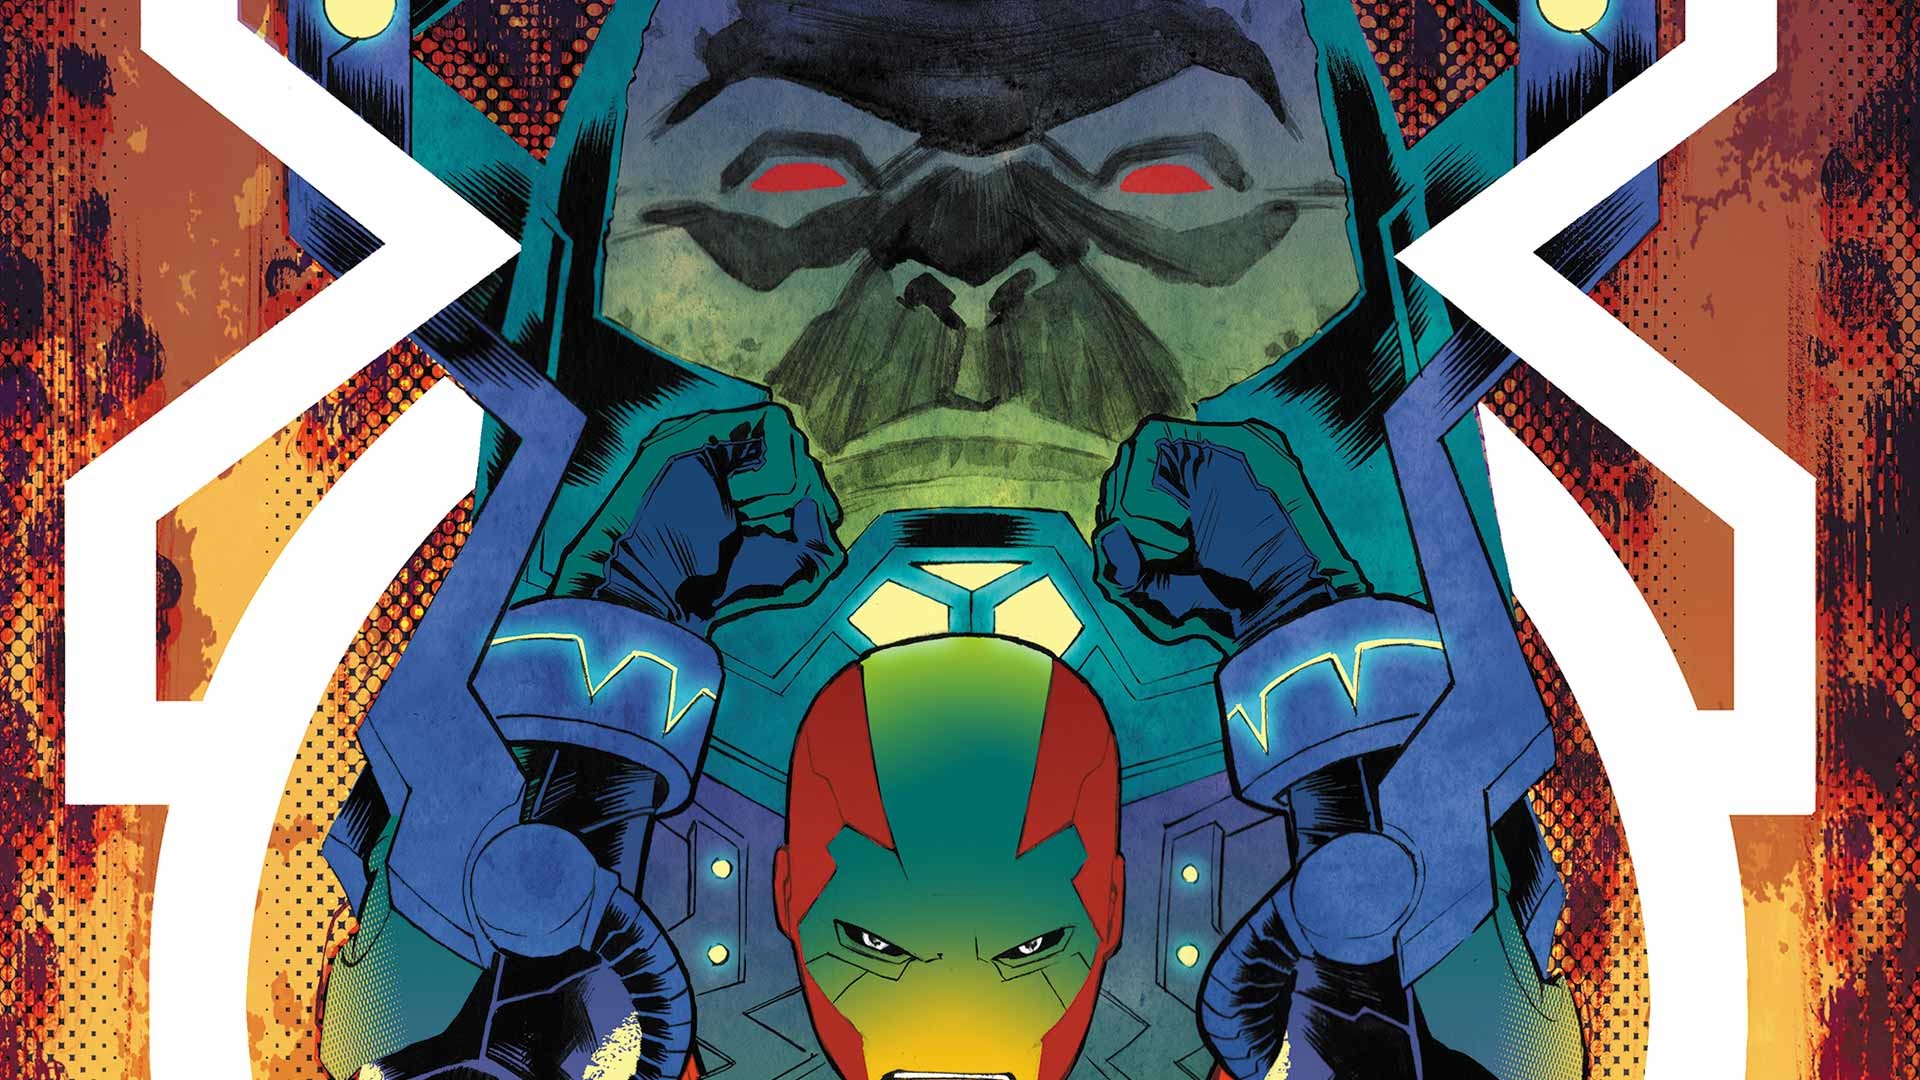 Darkseid is dead, but the DARKSEID WAR rages on in JUSTICE LEAGUE DC